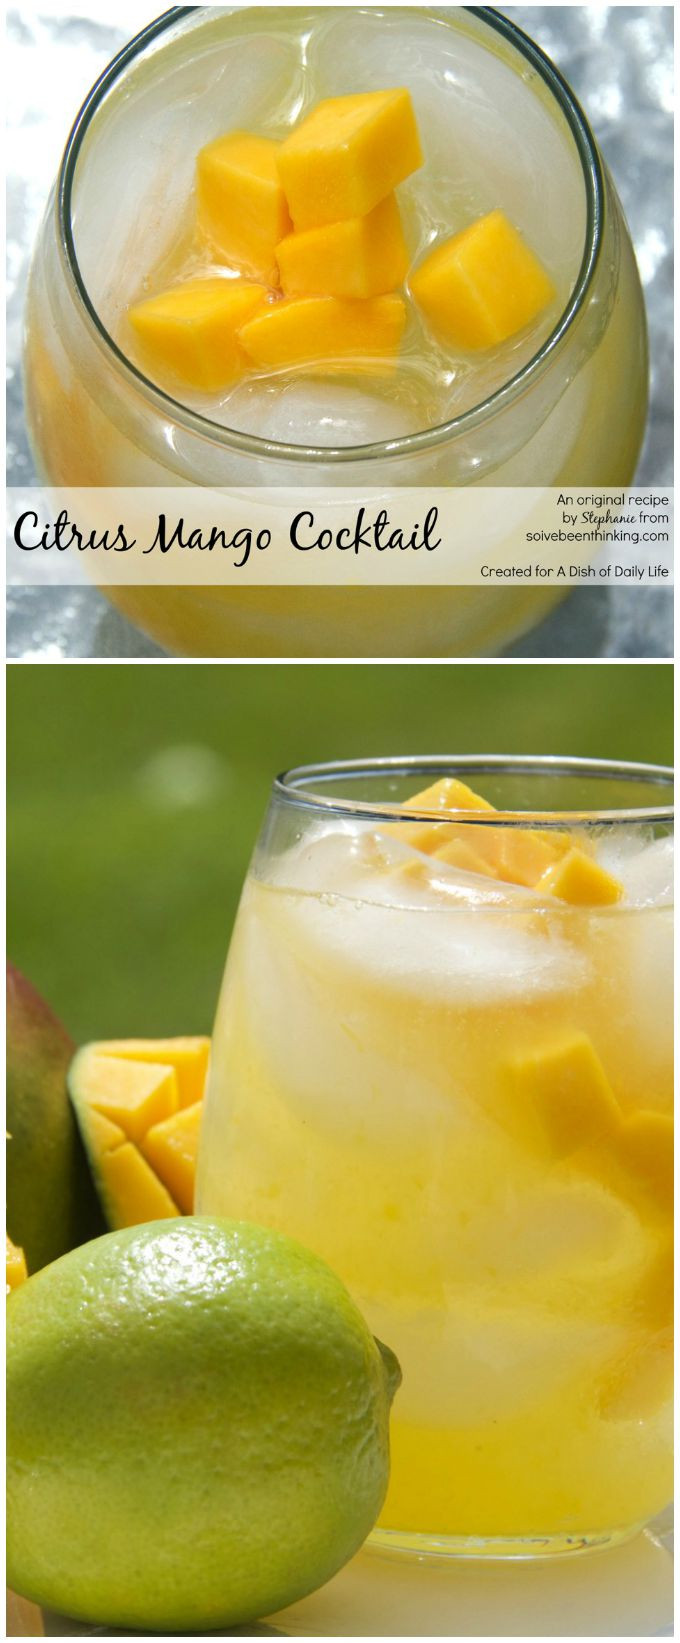 Mango Cocktail Recipes
 Citrus Mango Cocktail Recipe A Dish of Daily Life